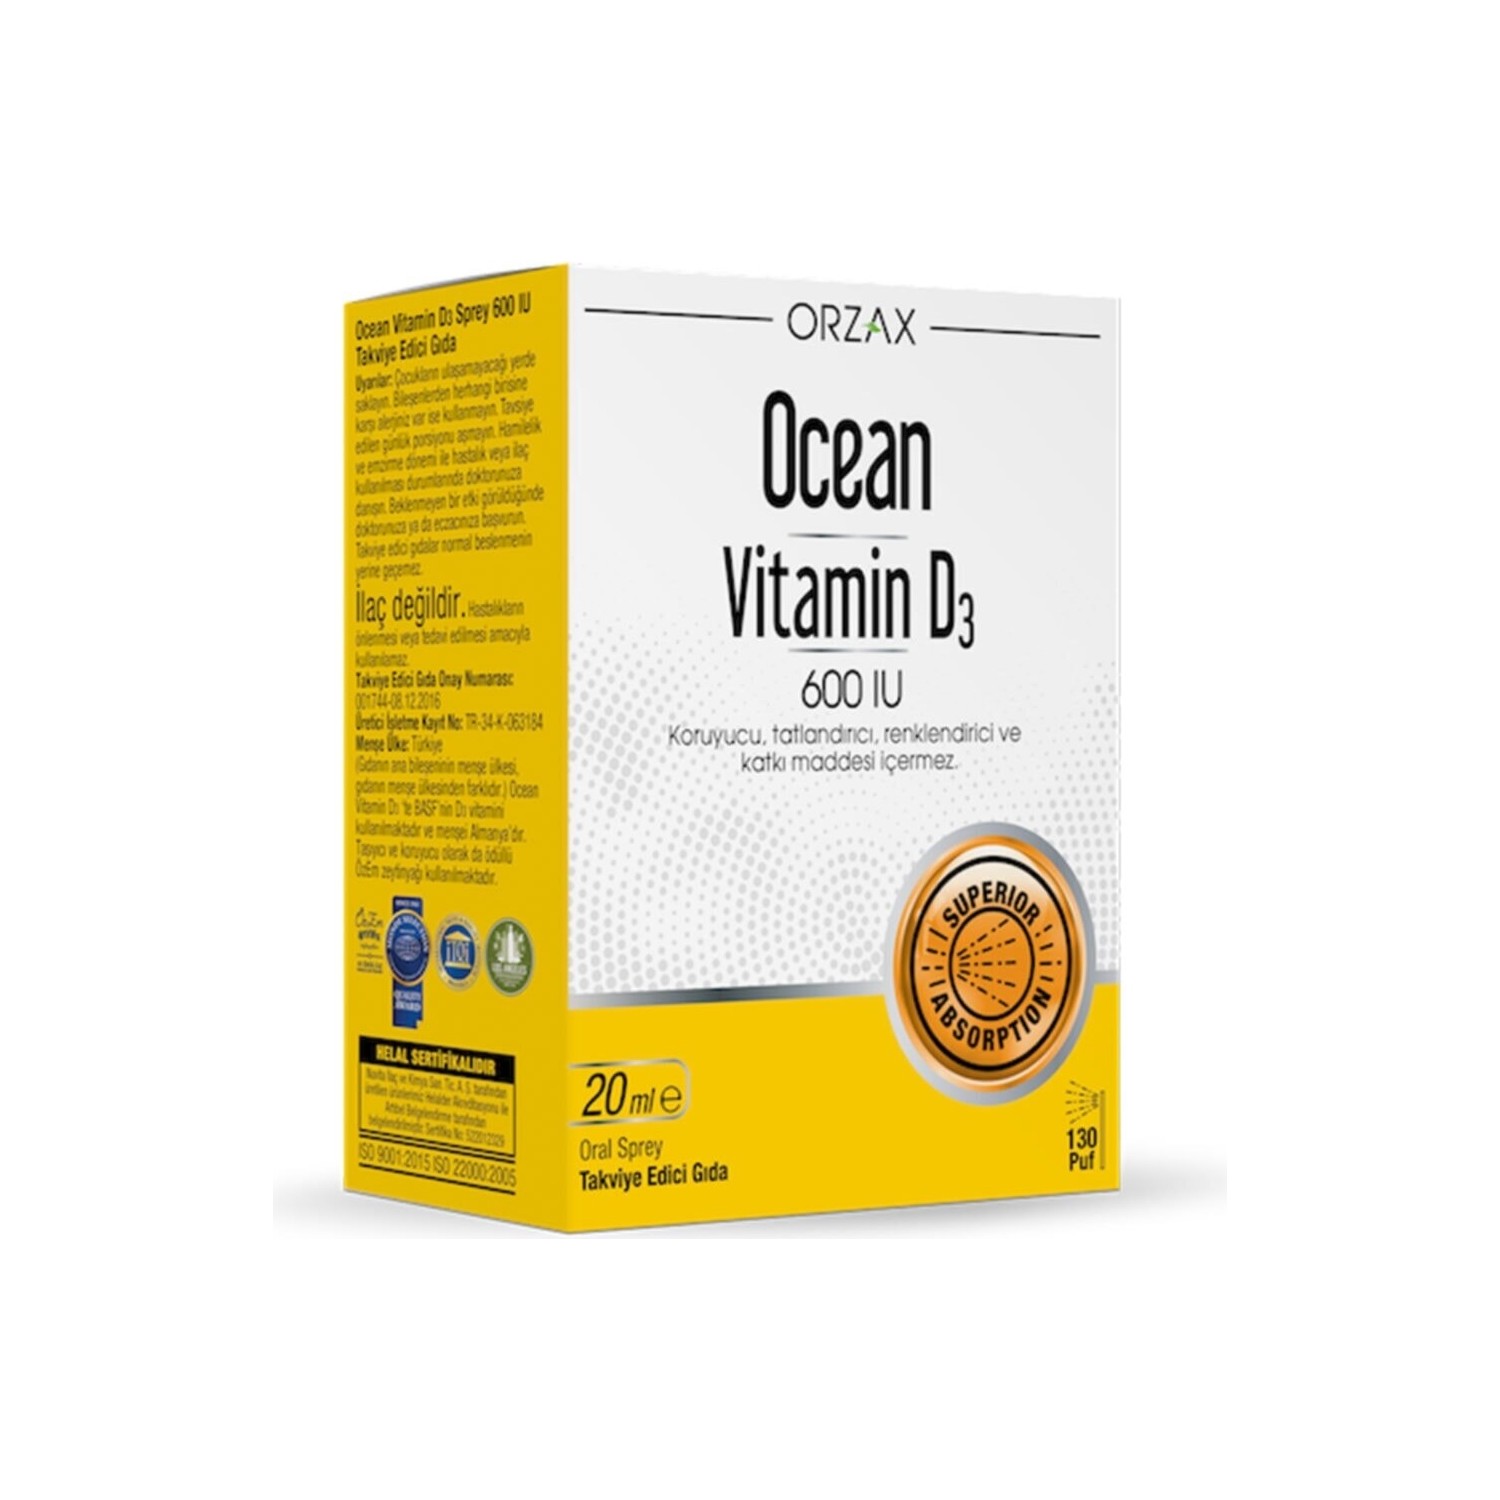 Спрей витамин D3 Ocean 600 МЕ, 20 мл ddrops baby 400 ме капли витамина d3 90 штук 3 шт в упаковке